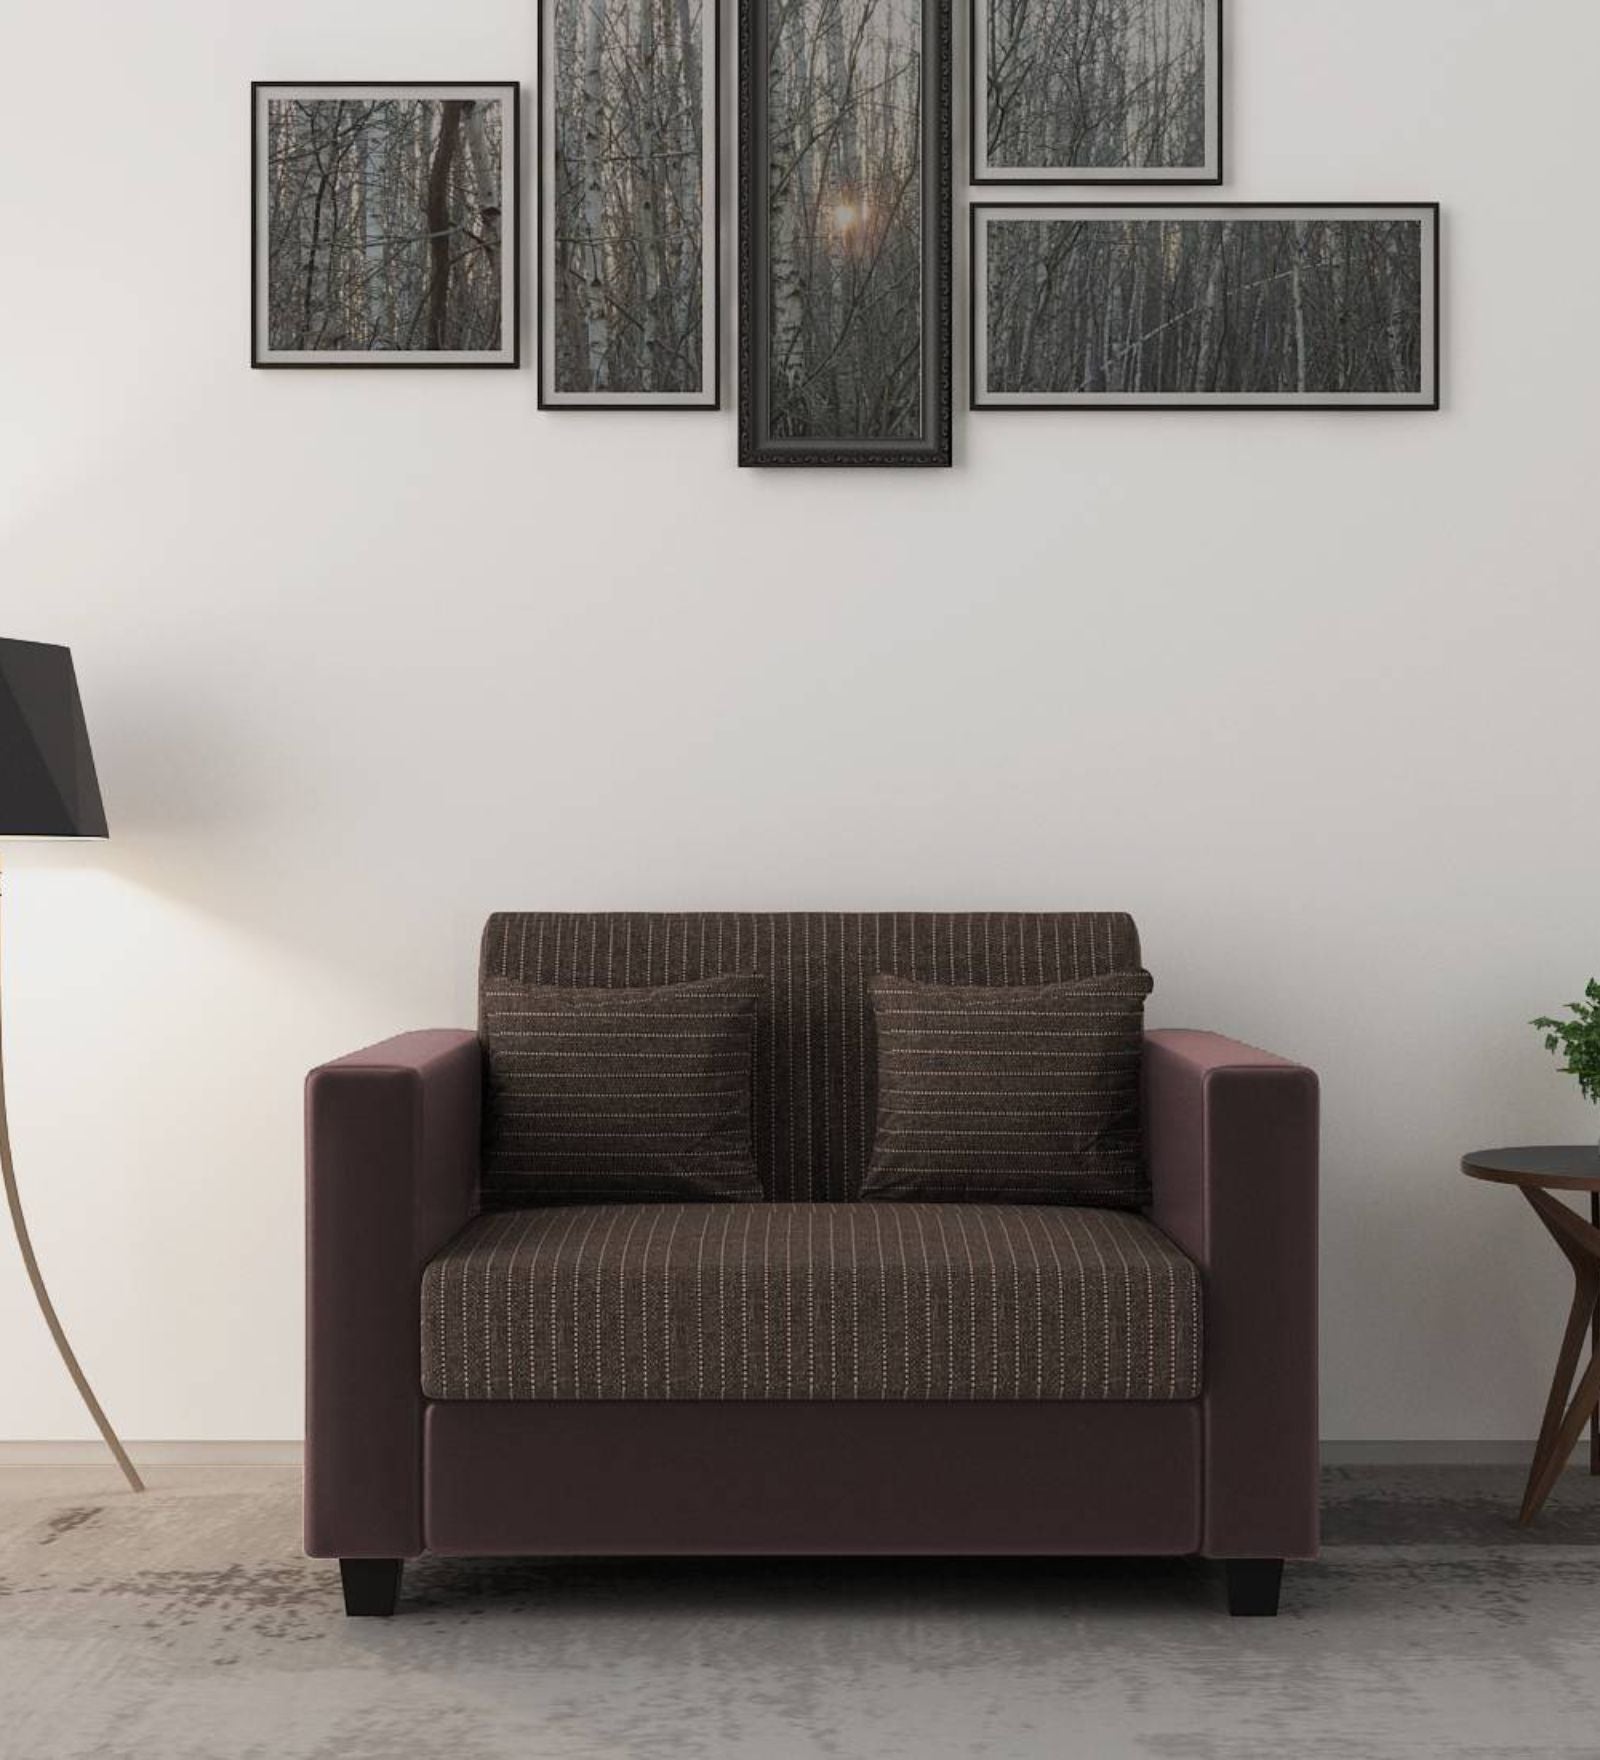 Baley Fabric 2 Seater Sofa in Lama Brown Colour